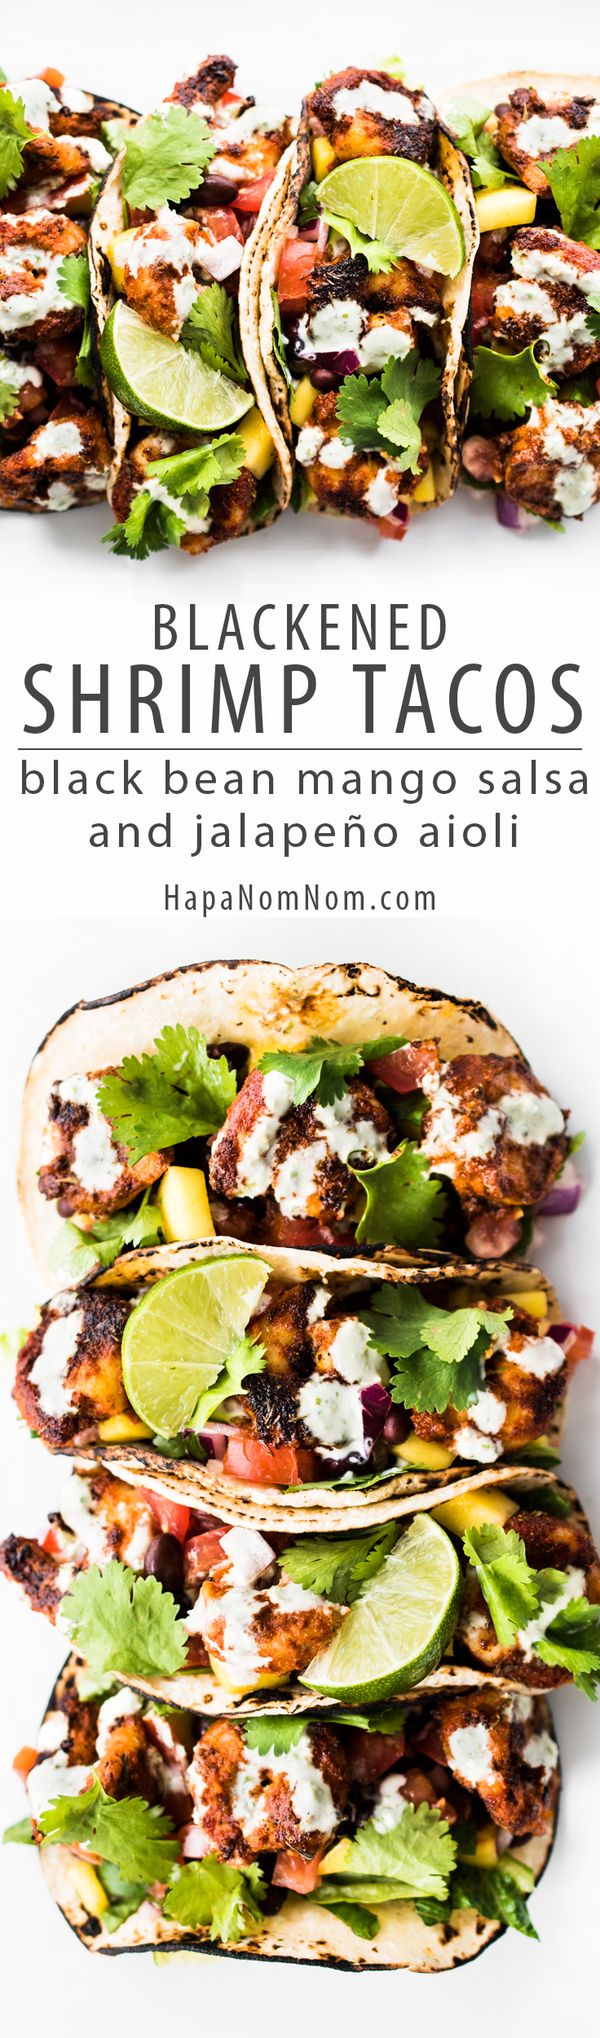 Blackened Shrimp Tacos with Black Bean Mango Salsa and Jalapeño Aioli